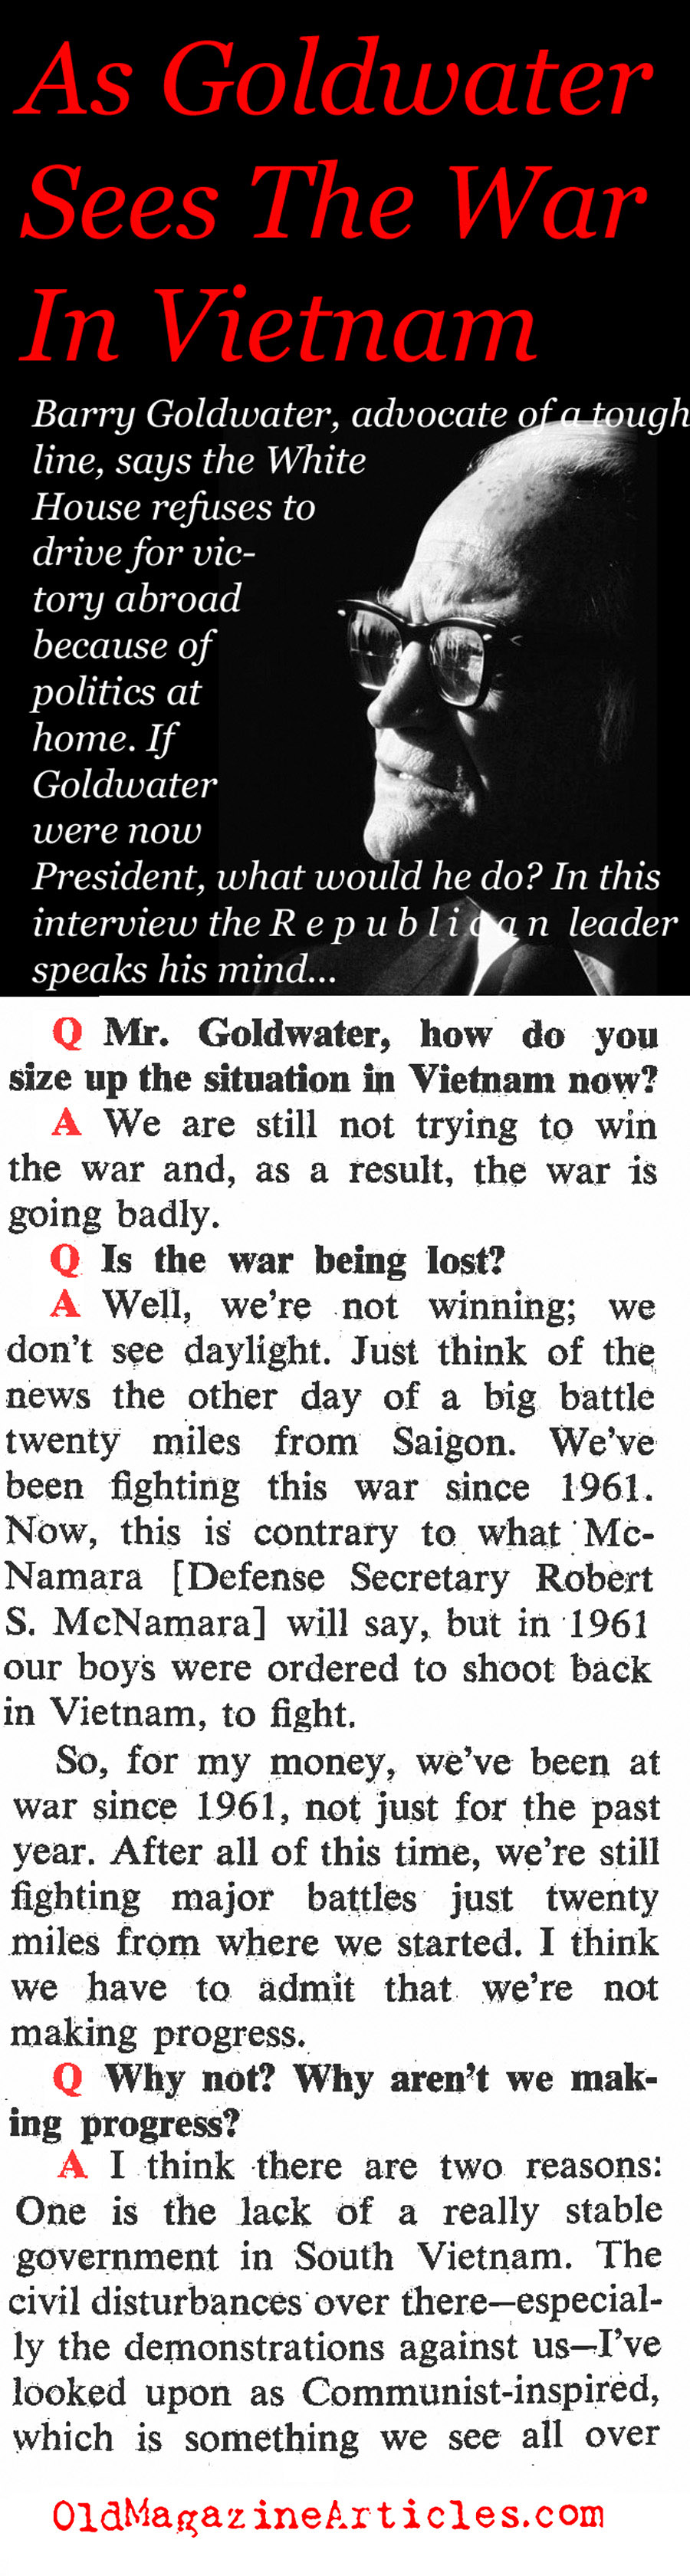 commando Nachtvlek gips SENATOR BARRY GOLDWATER SUPPORT FOR VIETNAM WAR - Magazine Article - Old  Magazine Articles